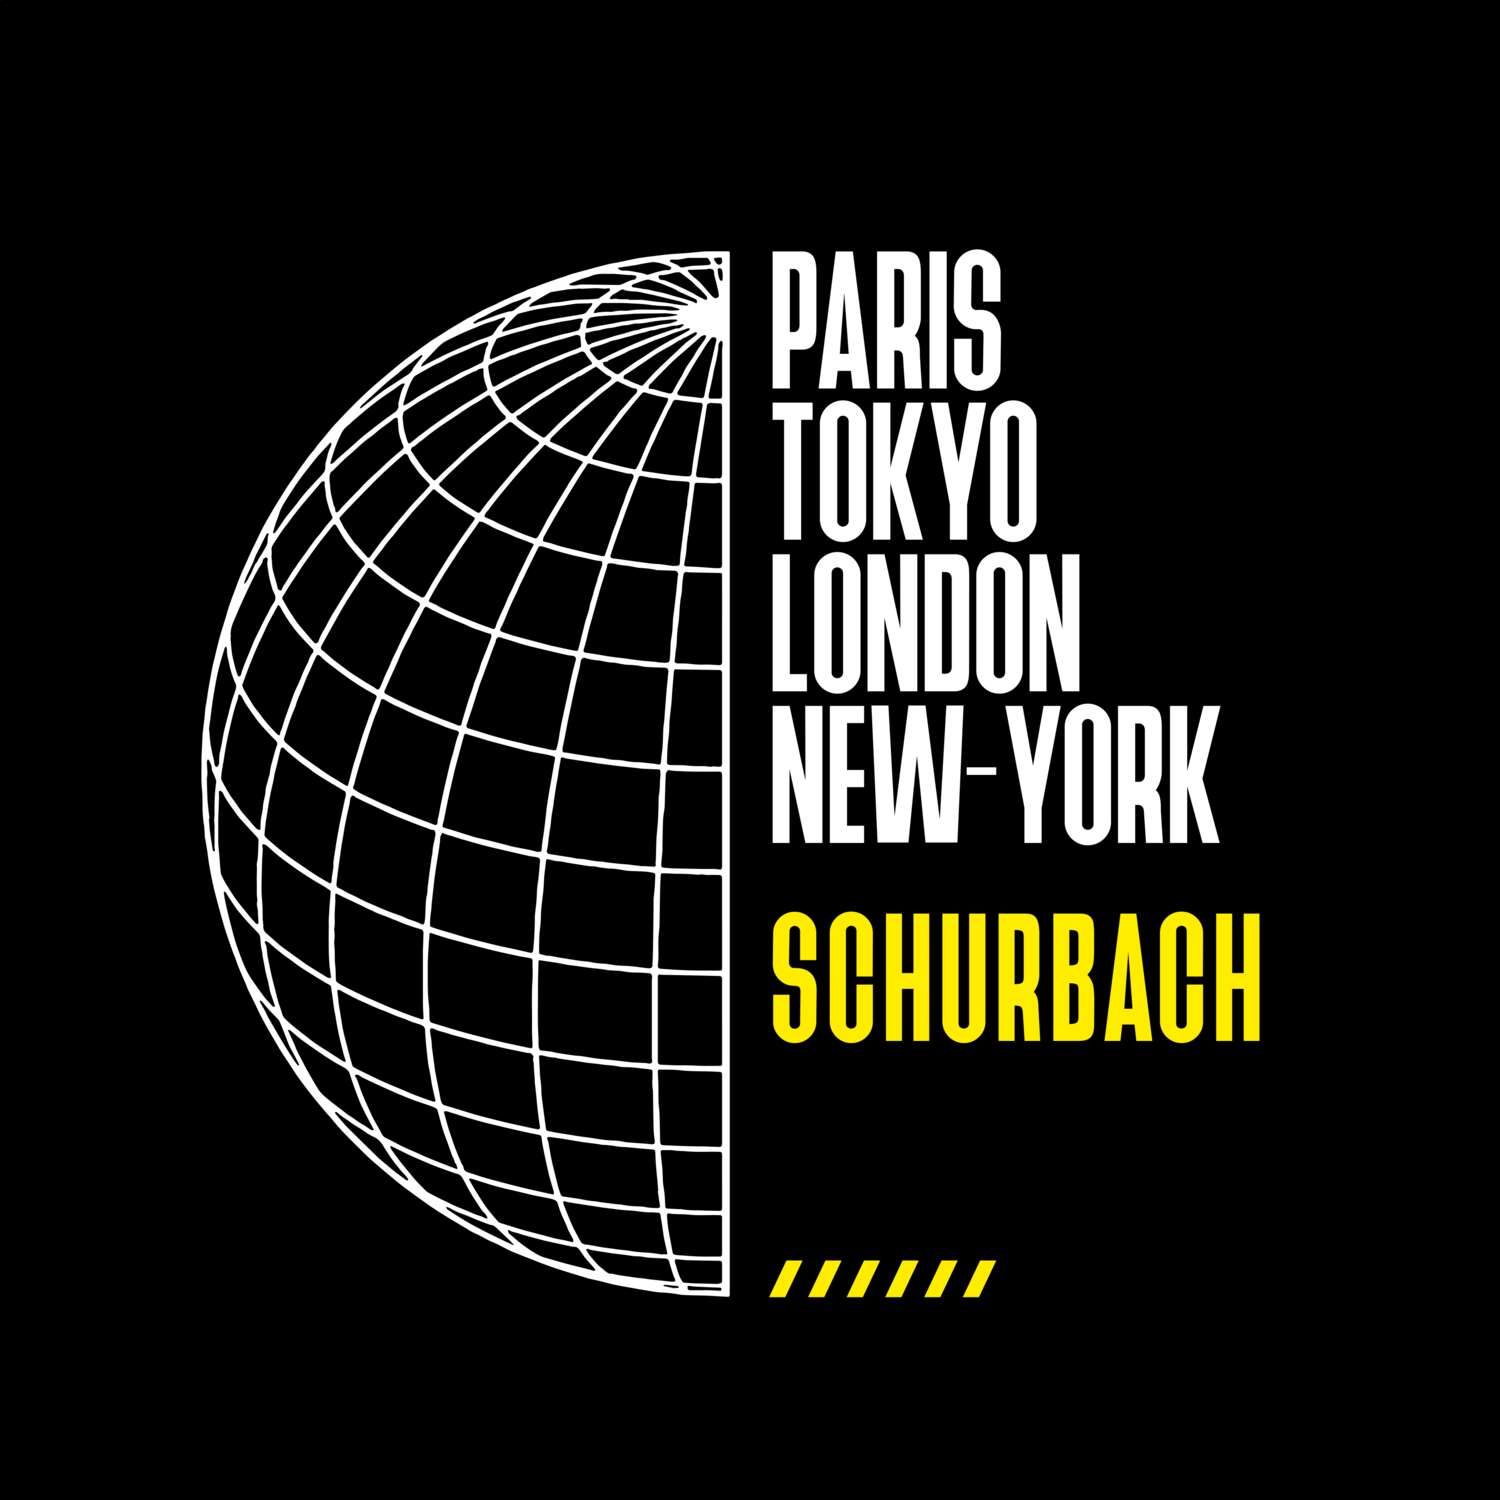 Schurbach T-Shirt »Paris Tokyo London«